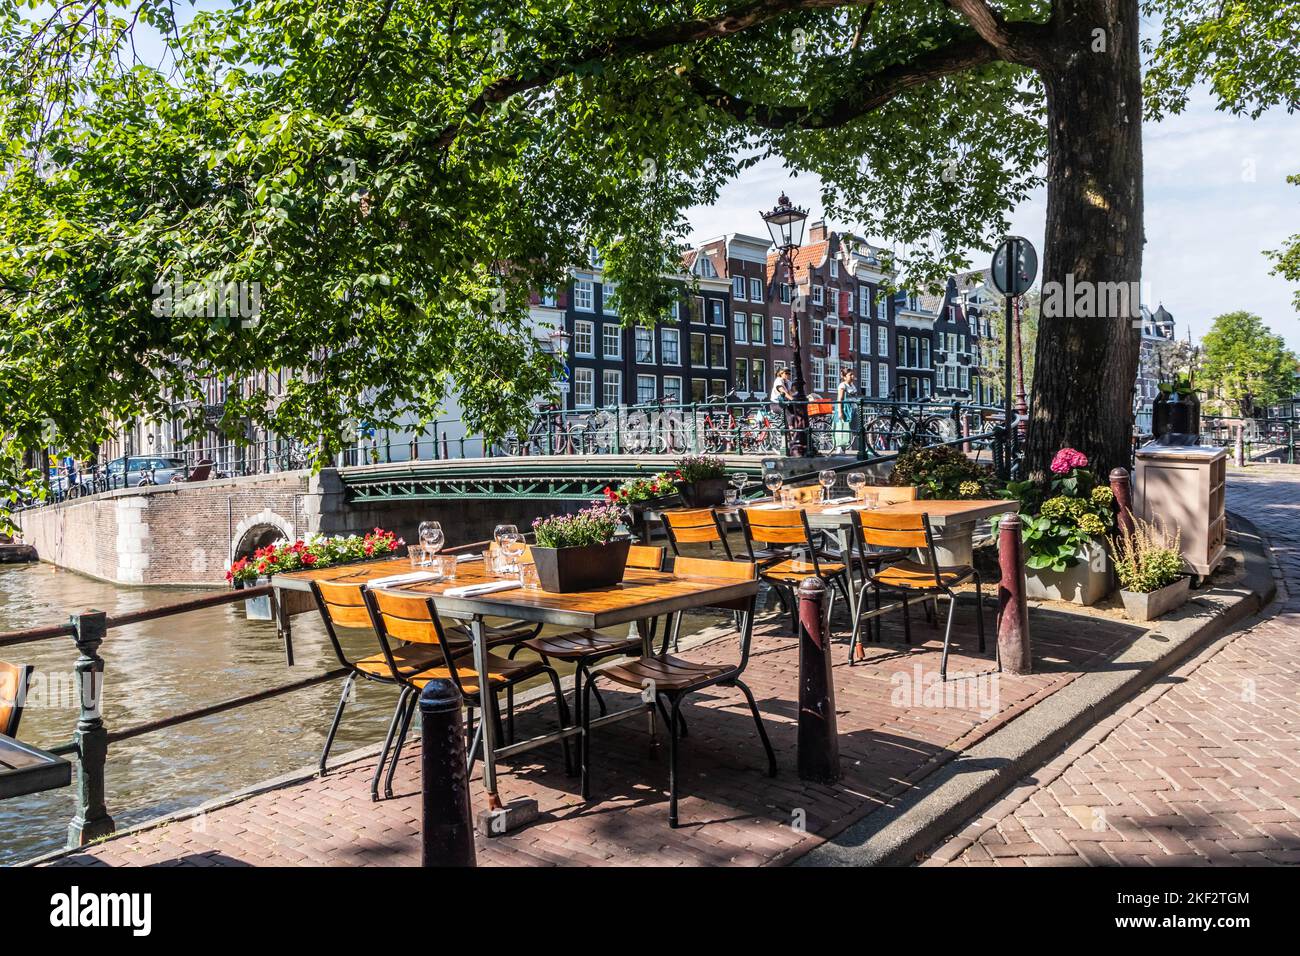 Restaurant Canalside, Brouwersgracht, Amsterdam, pays-Bas Banque D'Images